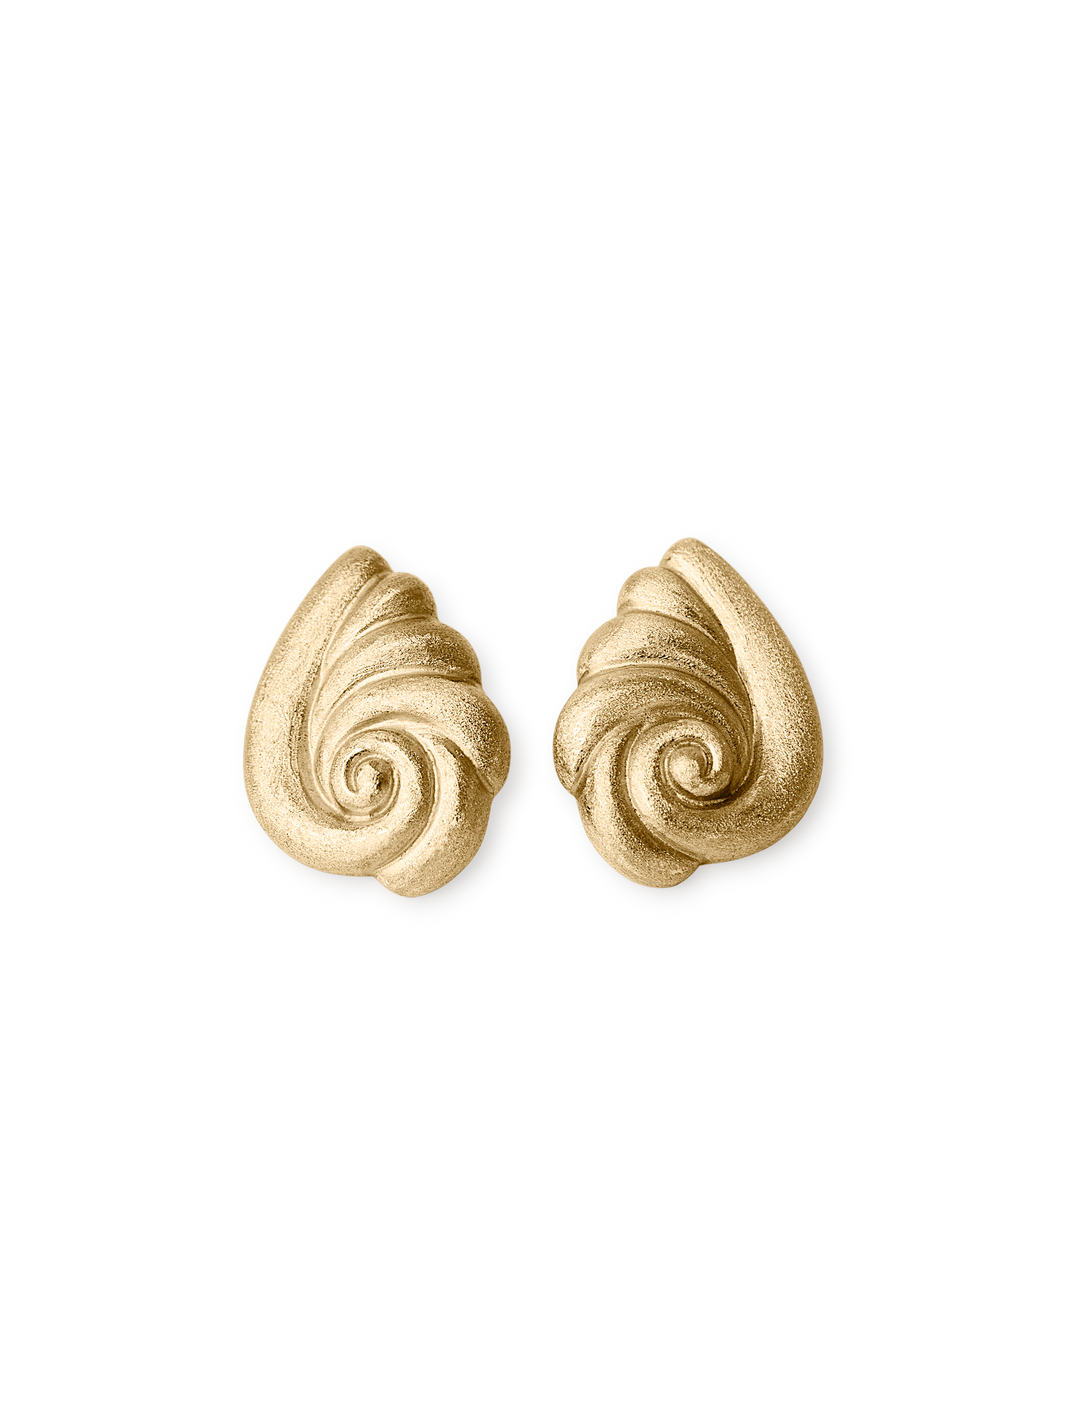 Seashell Earrings 18k gold plated brass